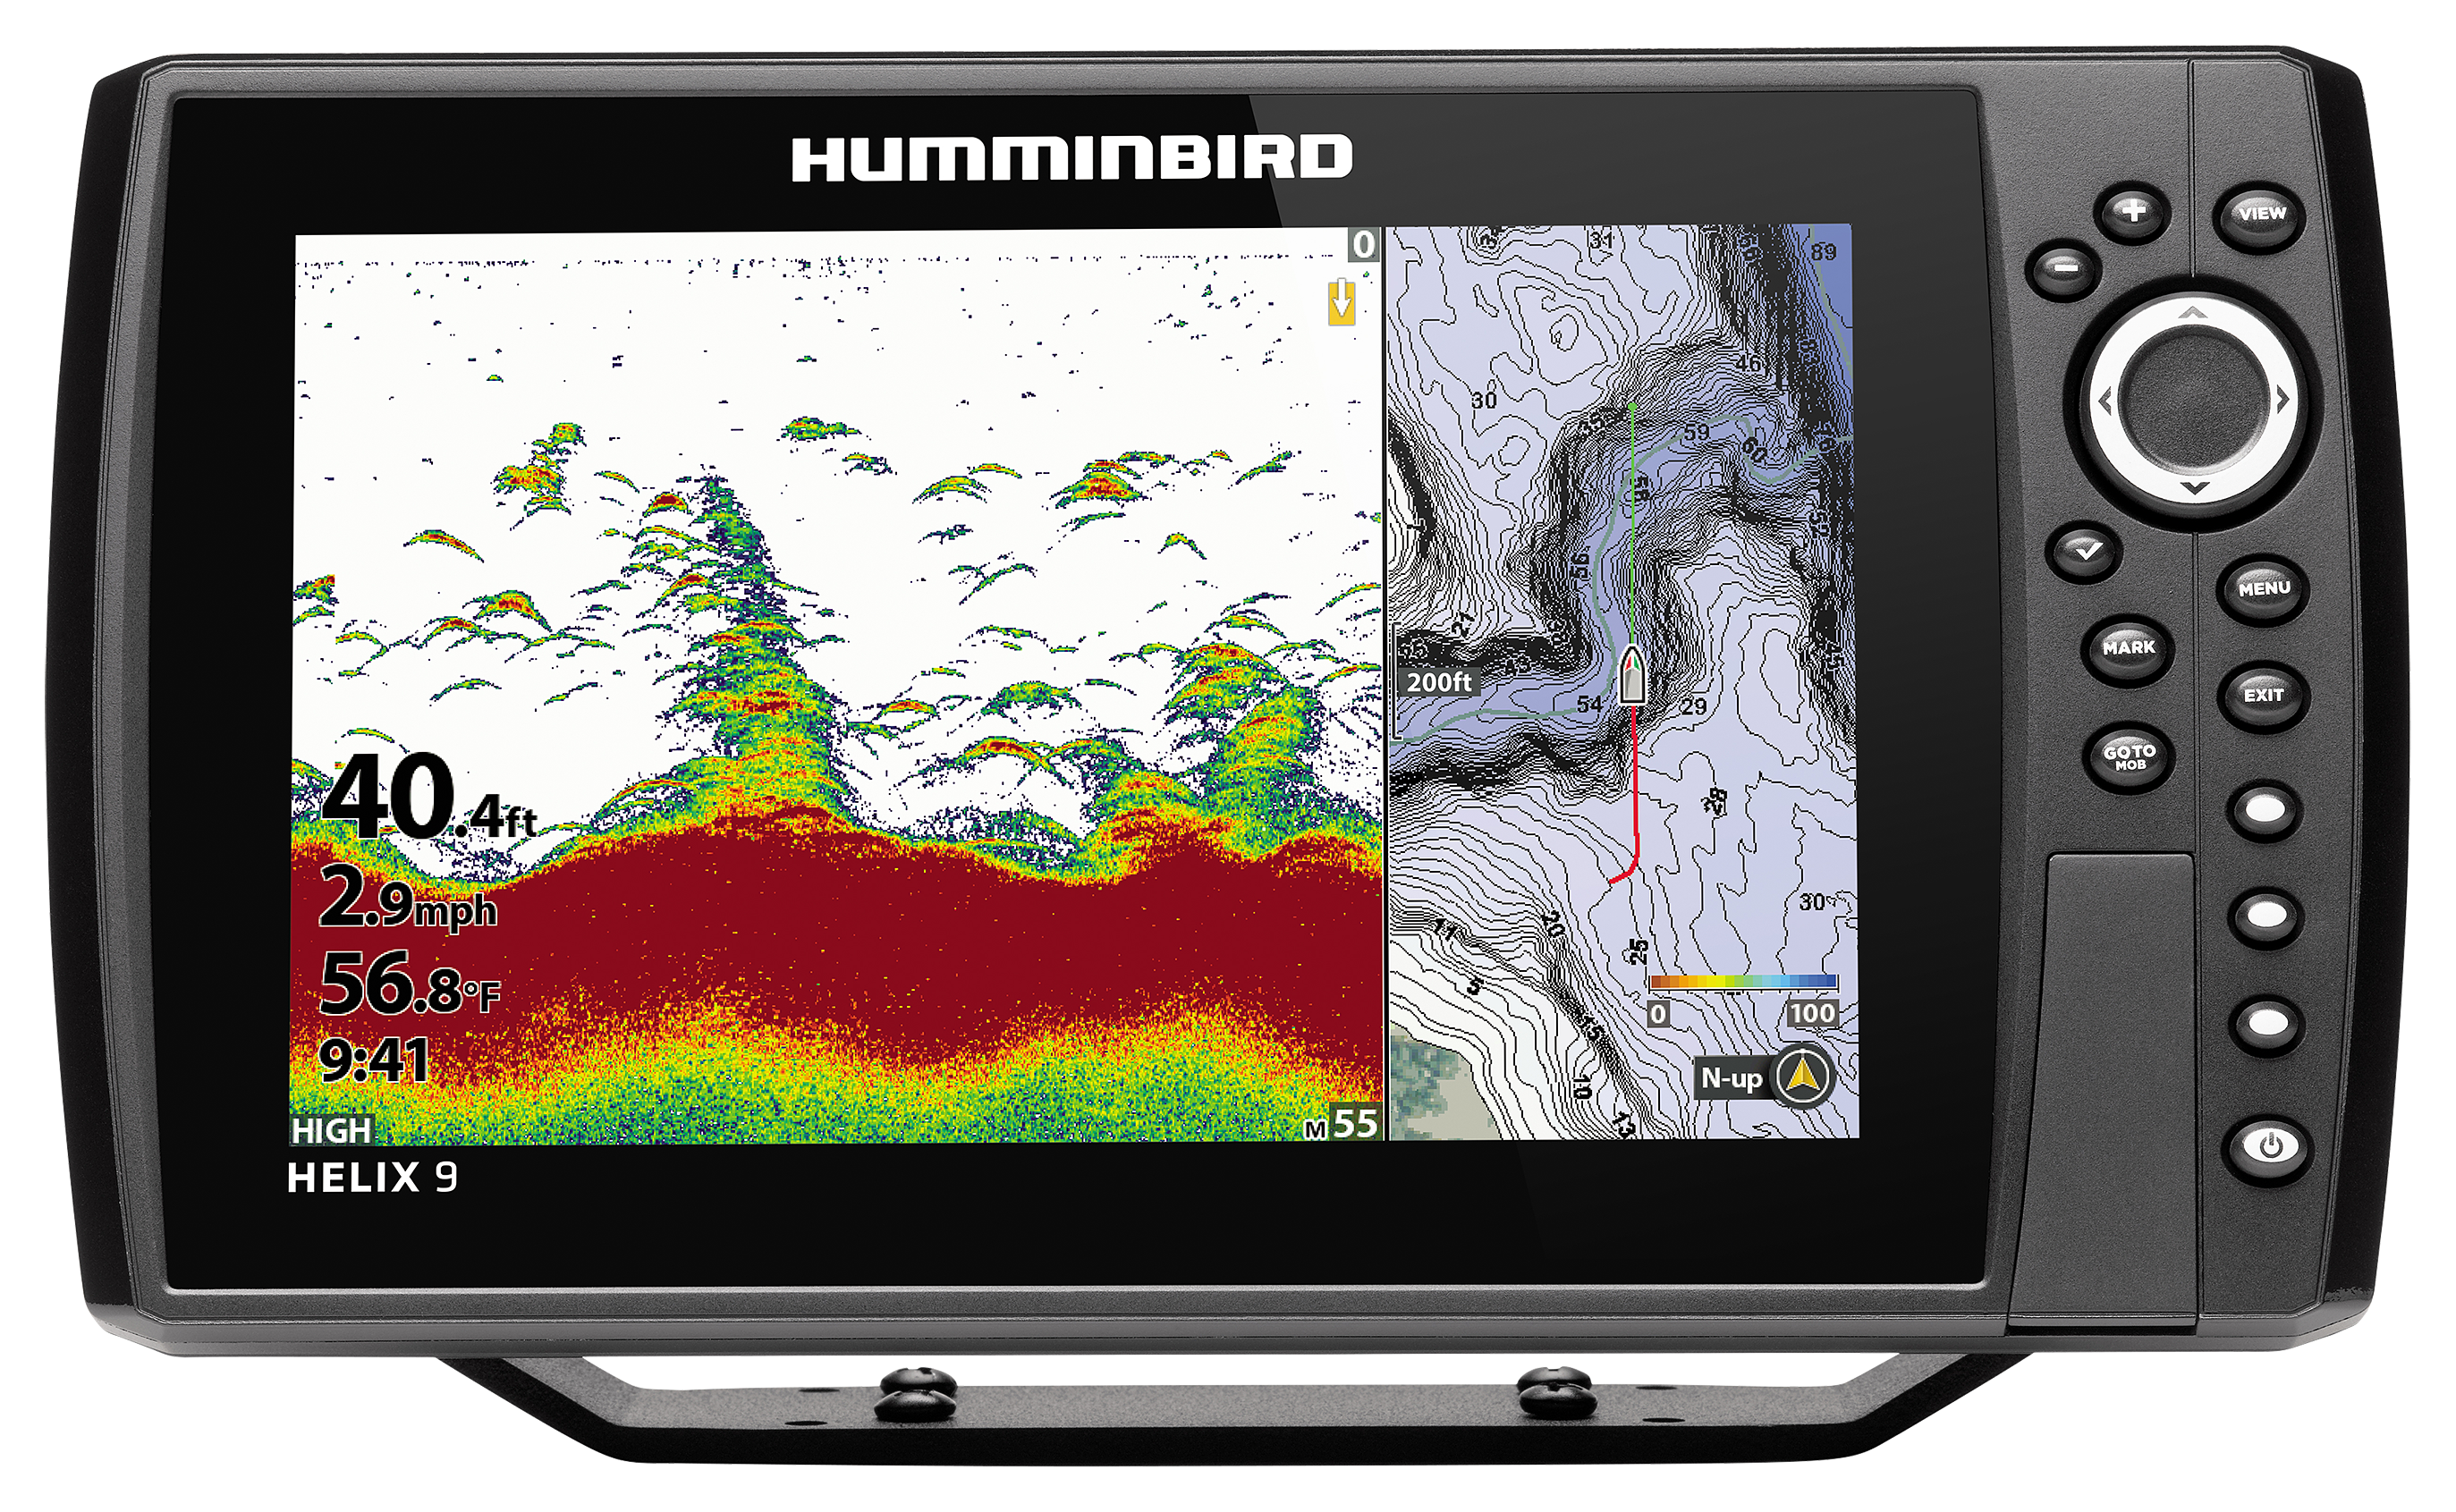 Humminbird HELIX 9 CHIRP MEGA SI GPS G4N Fish Finder/Chartplotter